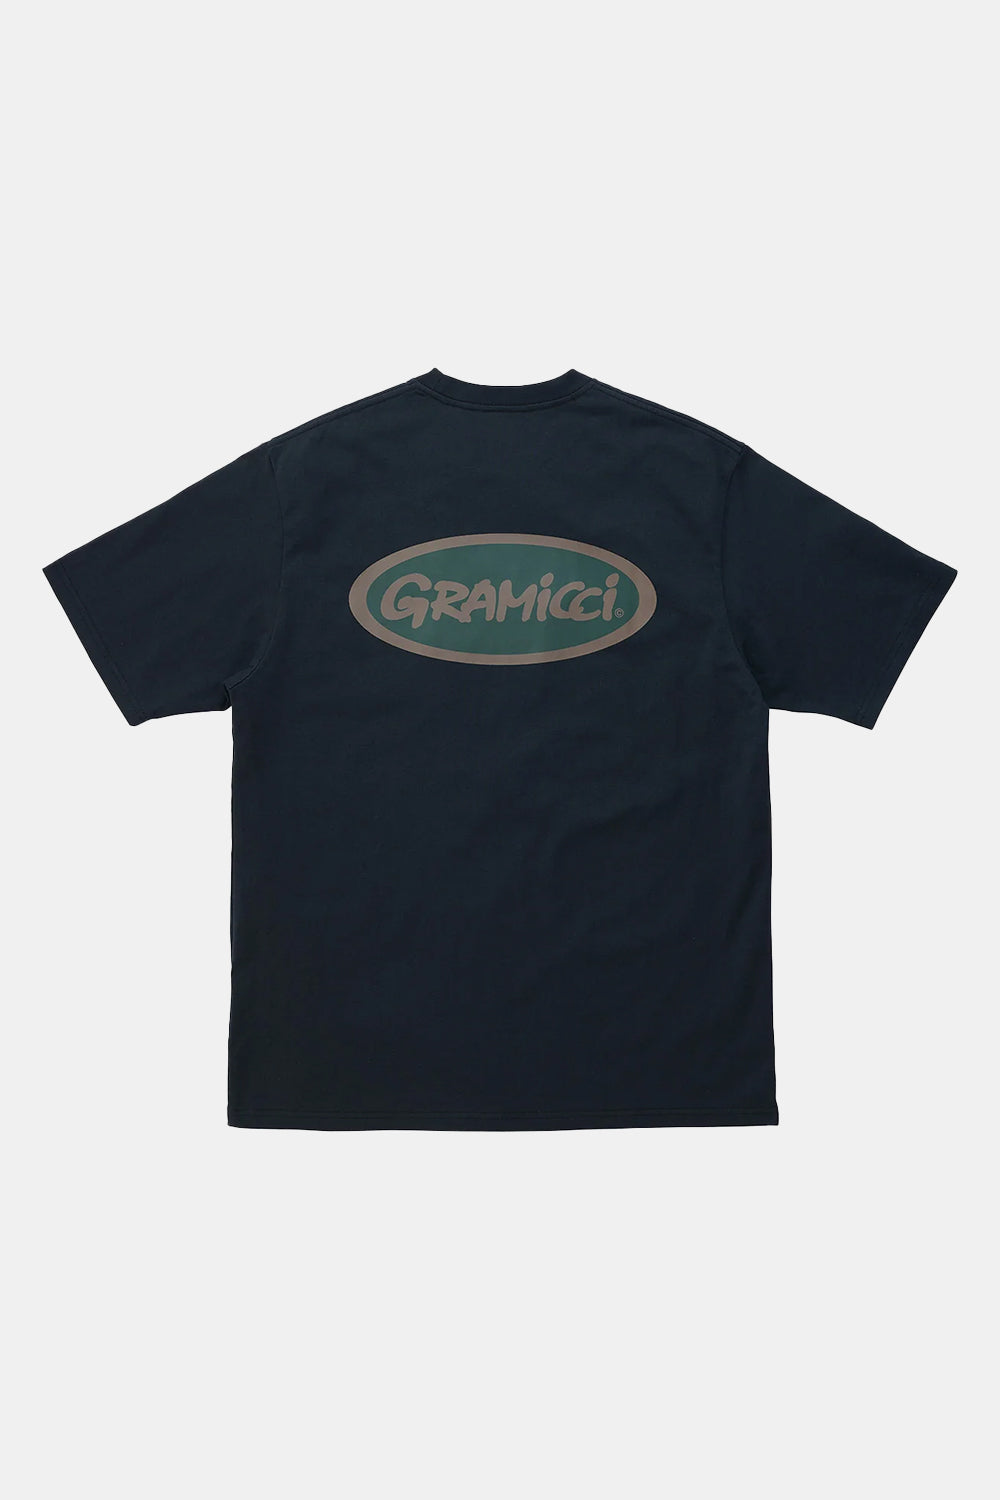 Gramicci Oval T-shirt (sort vintage)